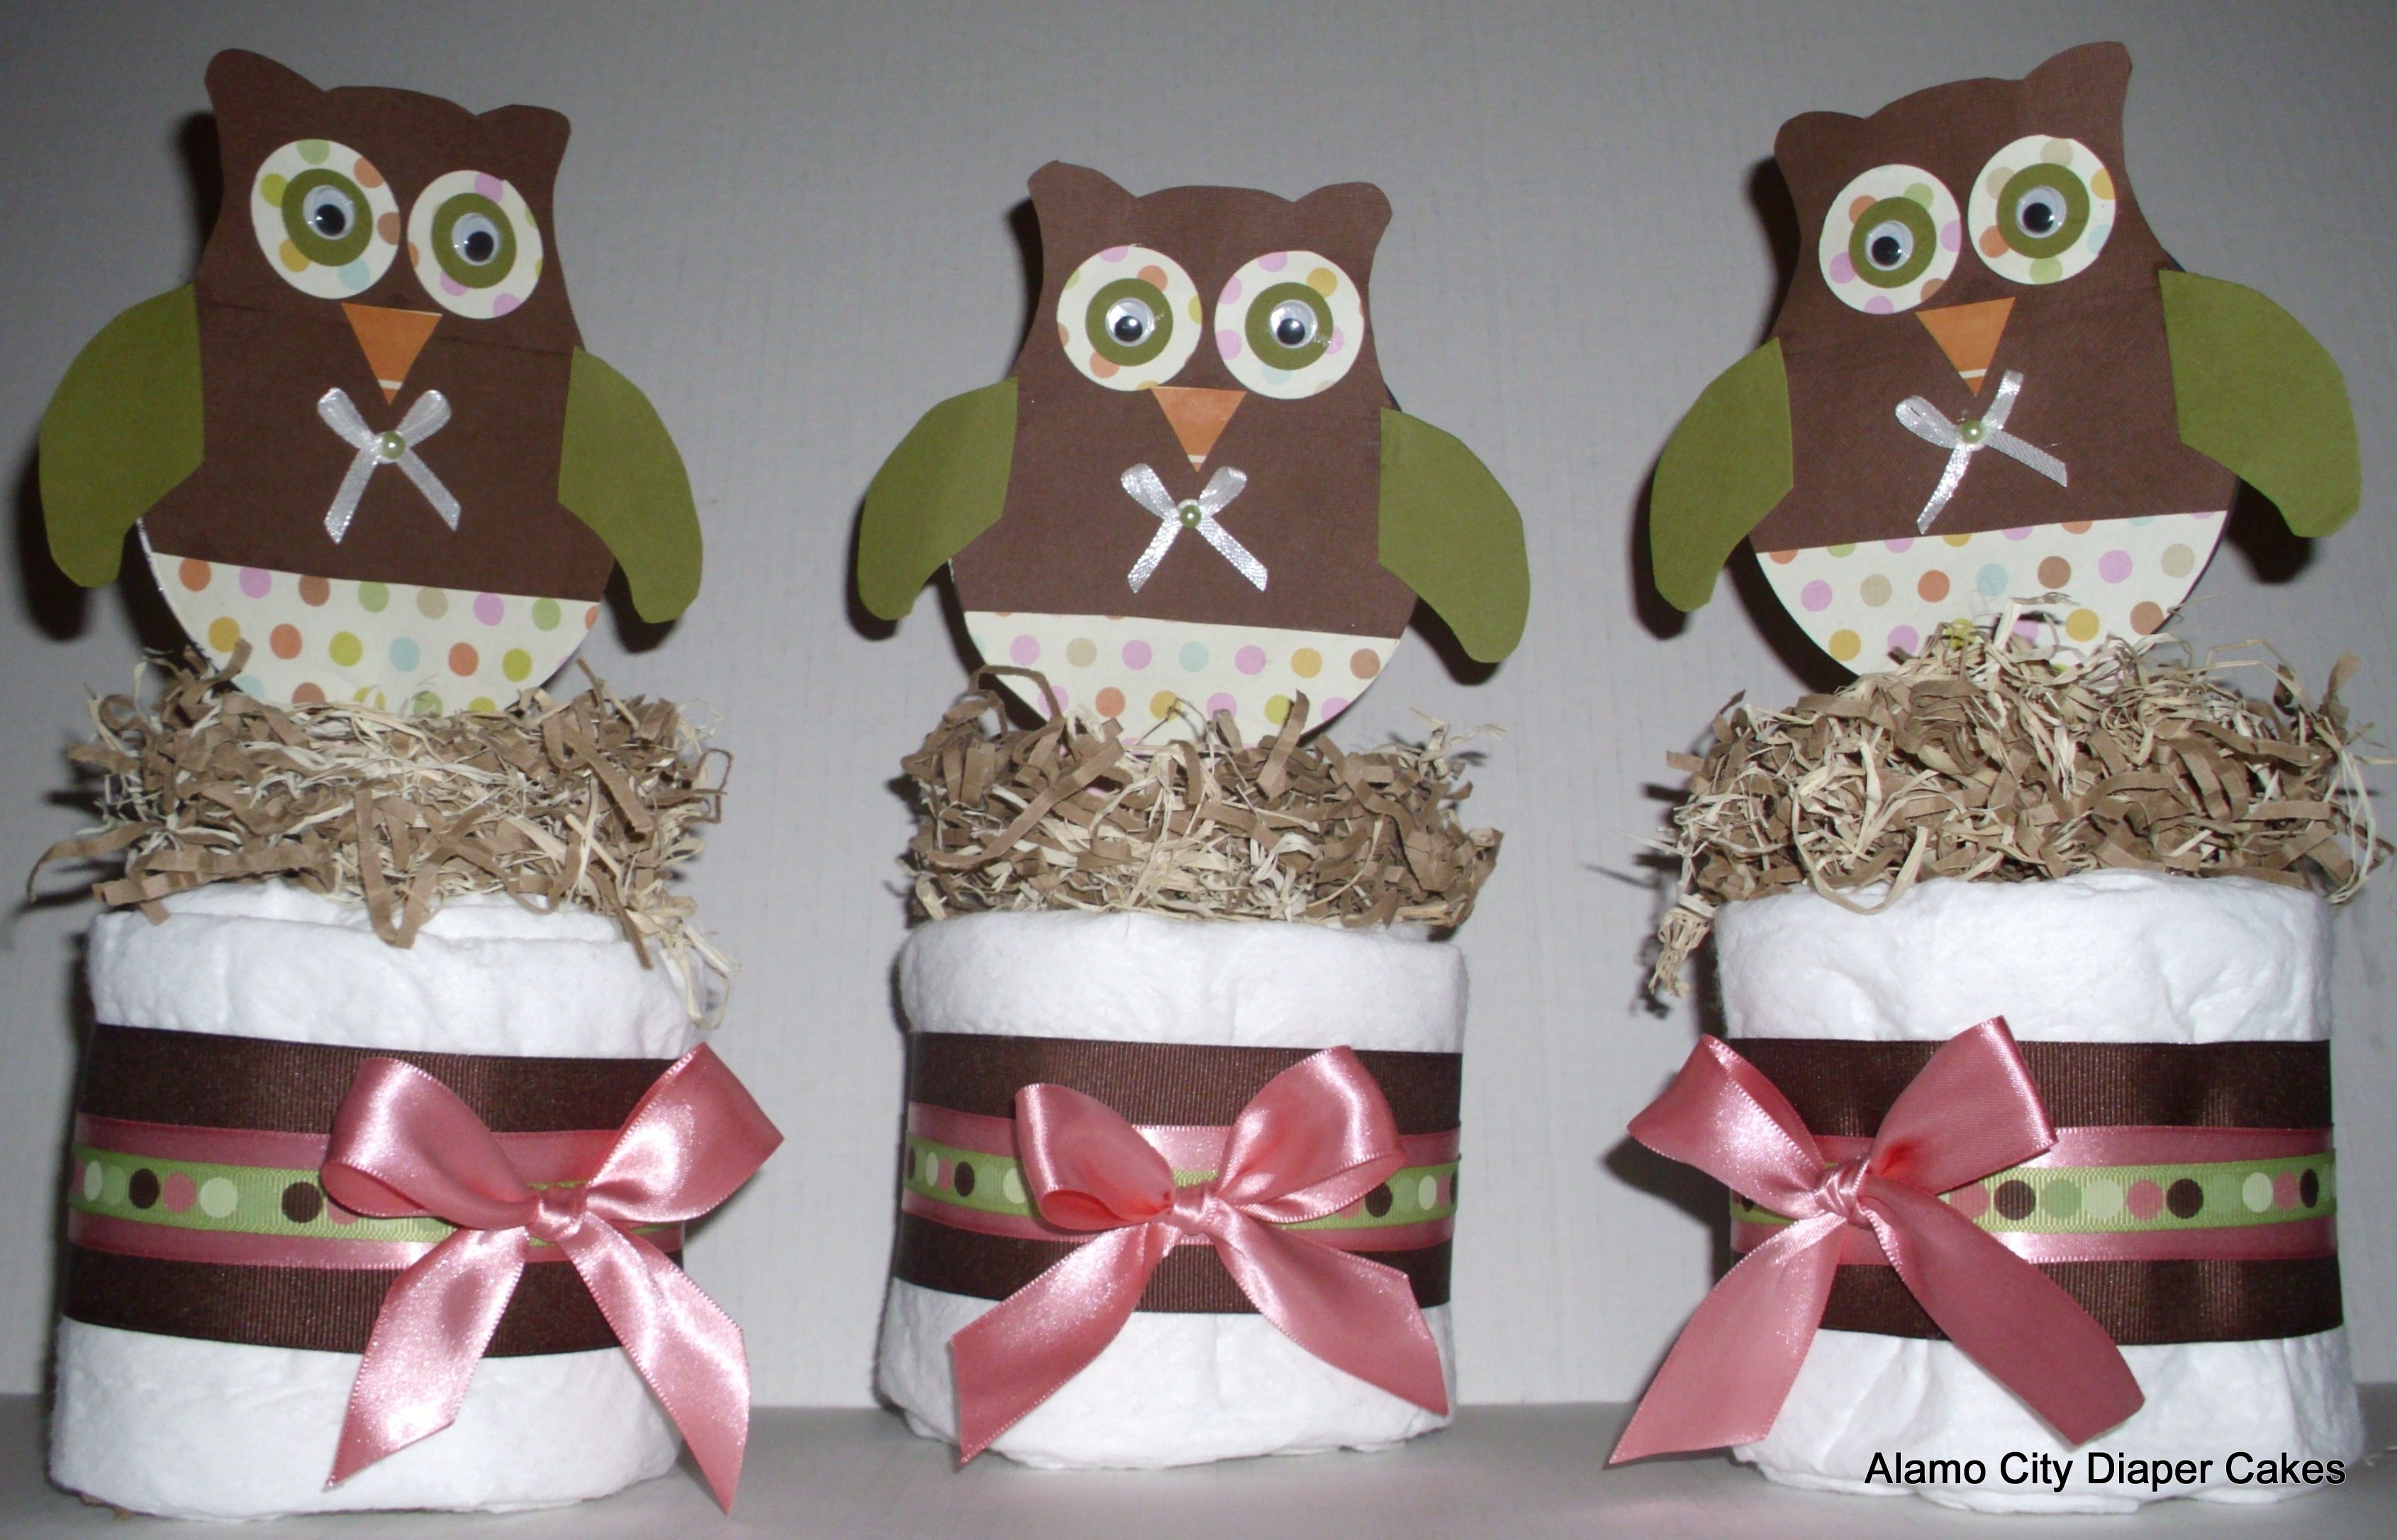 Best ideas about DIY Owl Baby Shower Decorations
. Save or Pin Diy Owl Baby Shower Decorations Now.